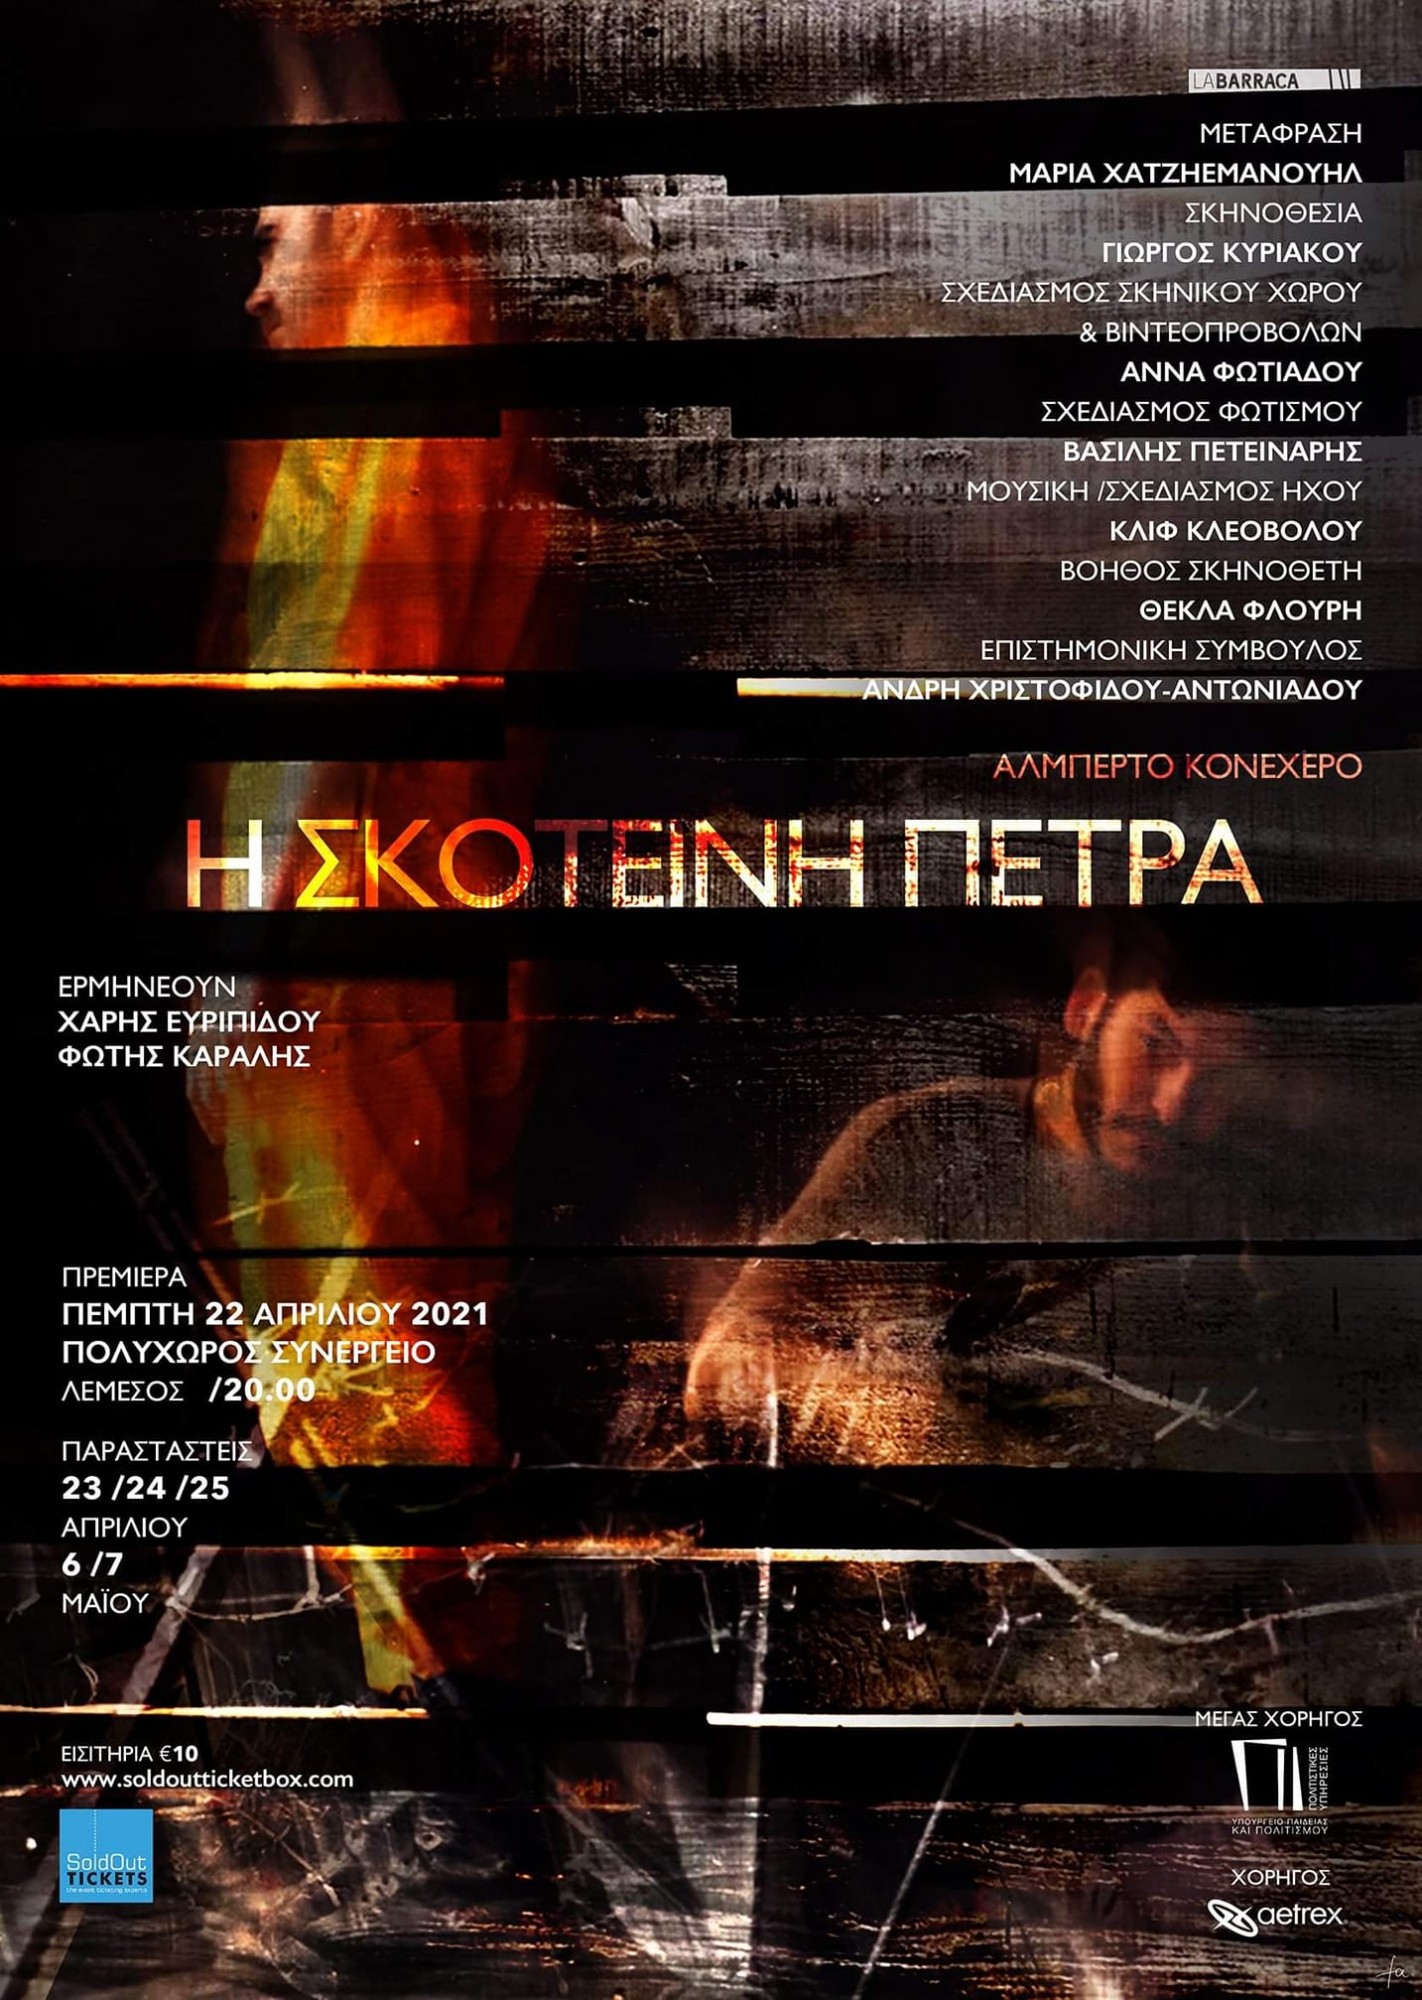 H “Σκοτεινή Πέτρα” είναι η παράσταση που δίνει “φως” στο κυπριακό θέατρο και αξίζει να την δεις